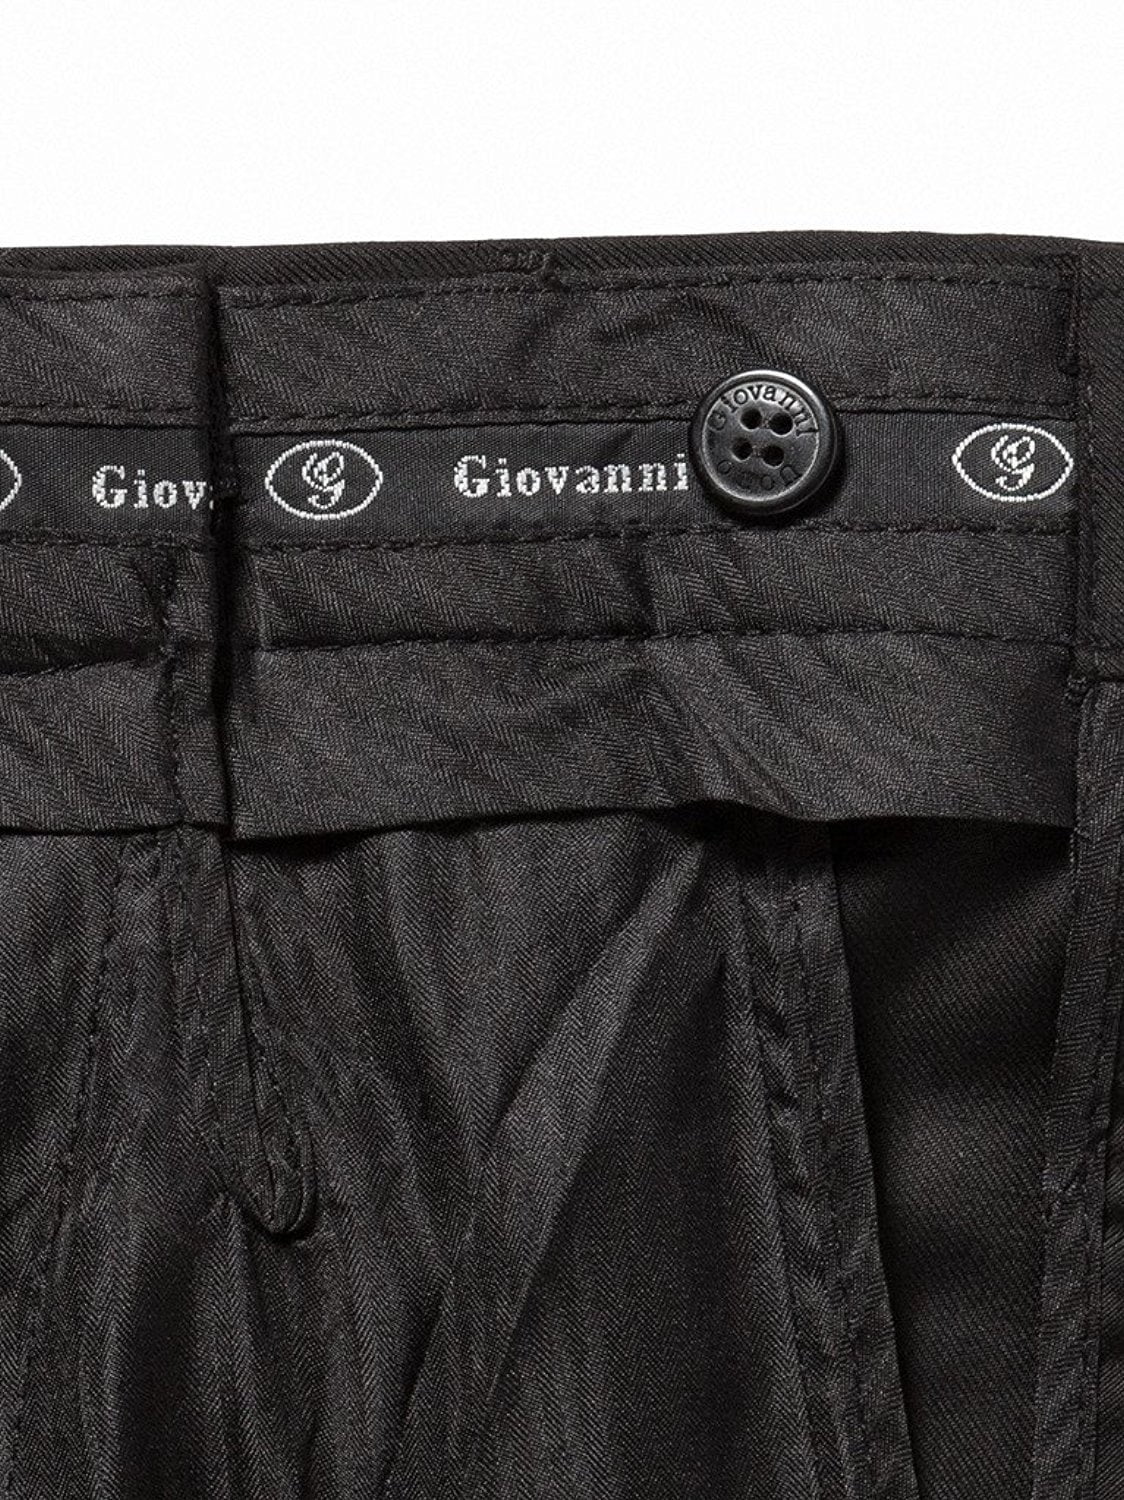 Details about   Bocaccio Uomo Boy's Black Flat Front Dress Pants with a Black Belt Sizes 4-20 